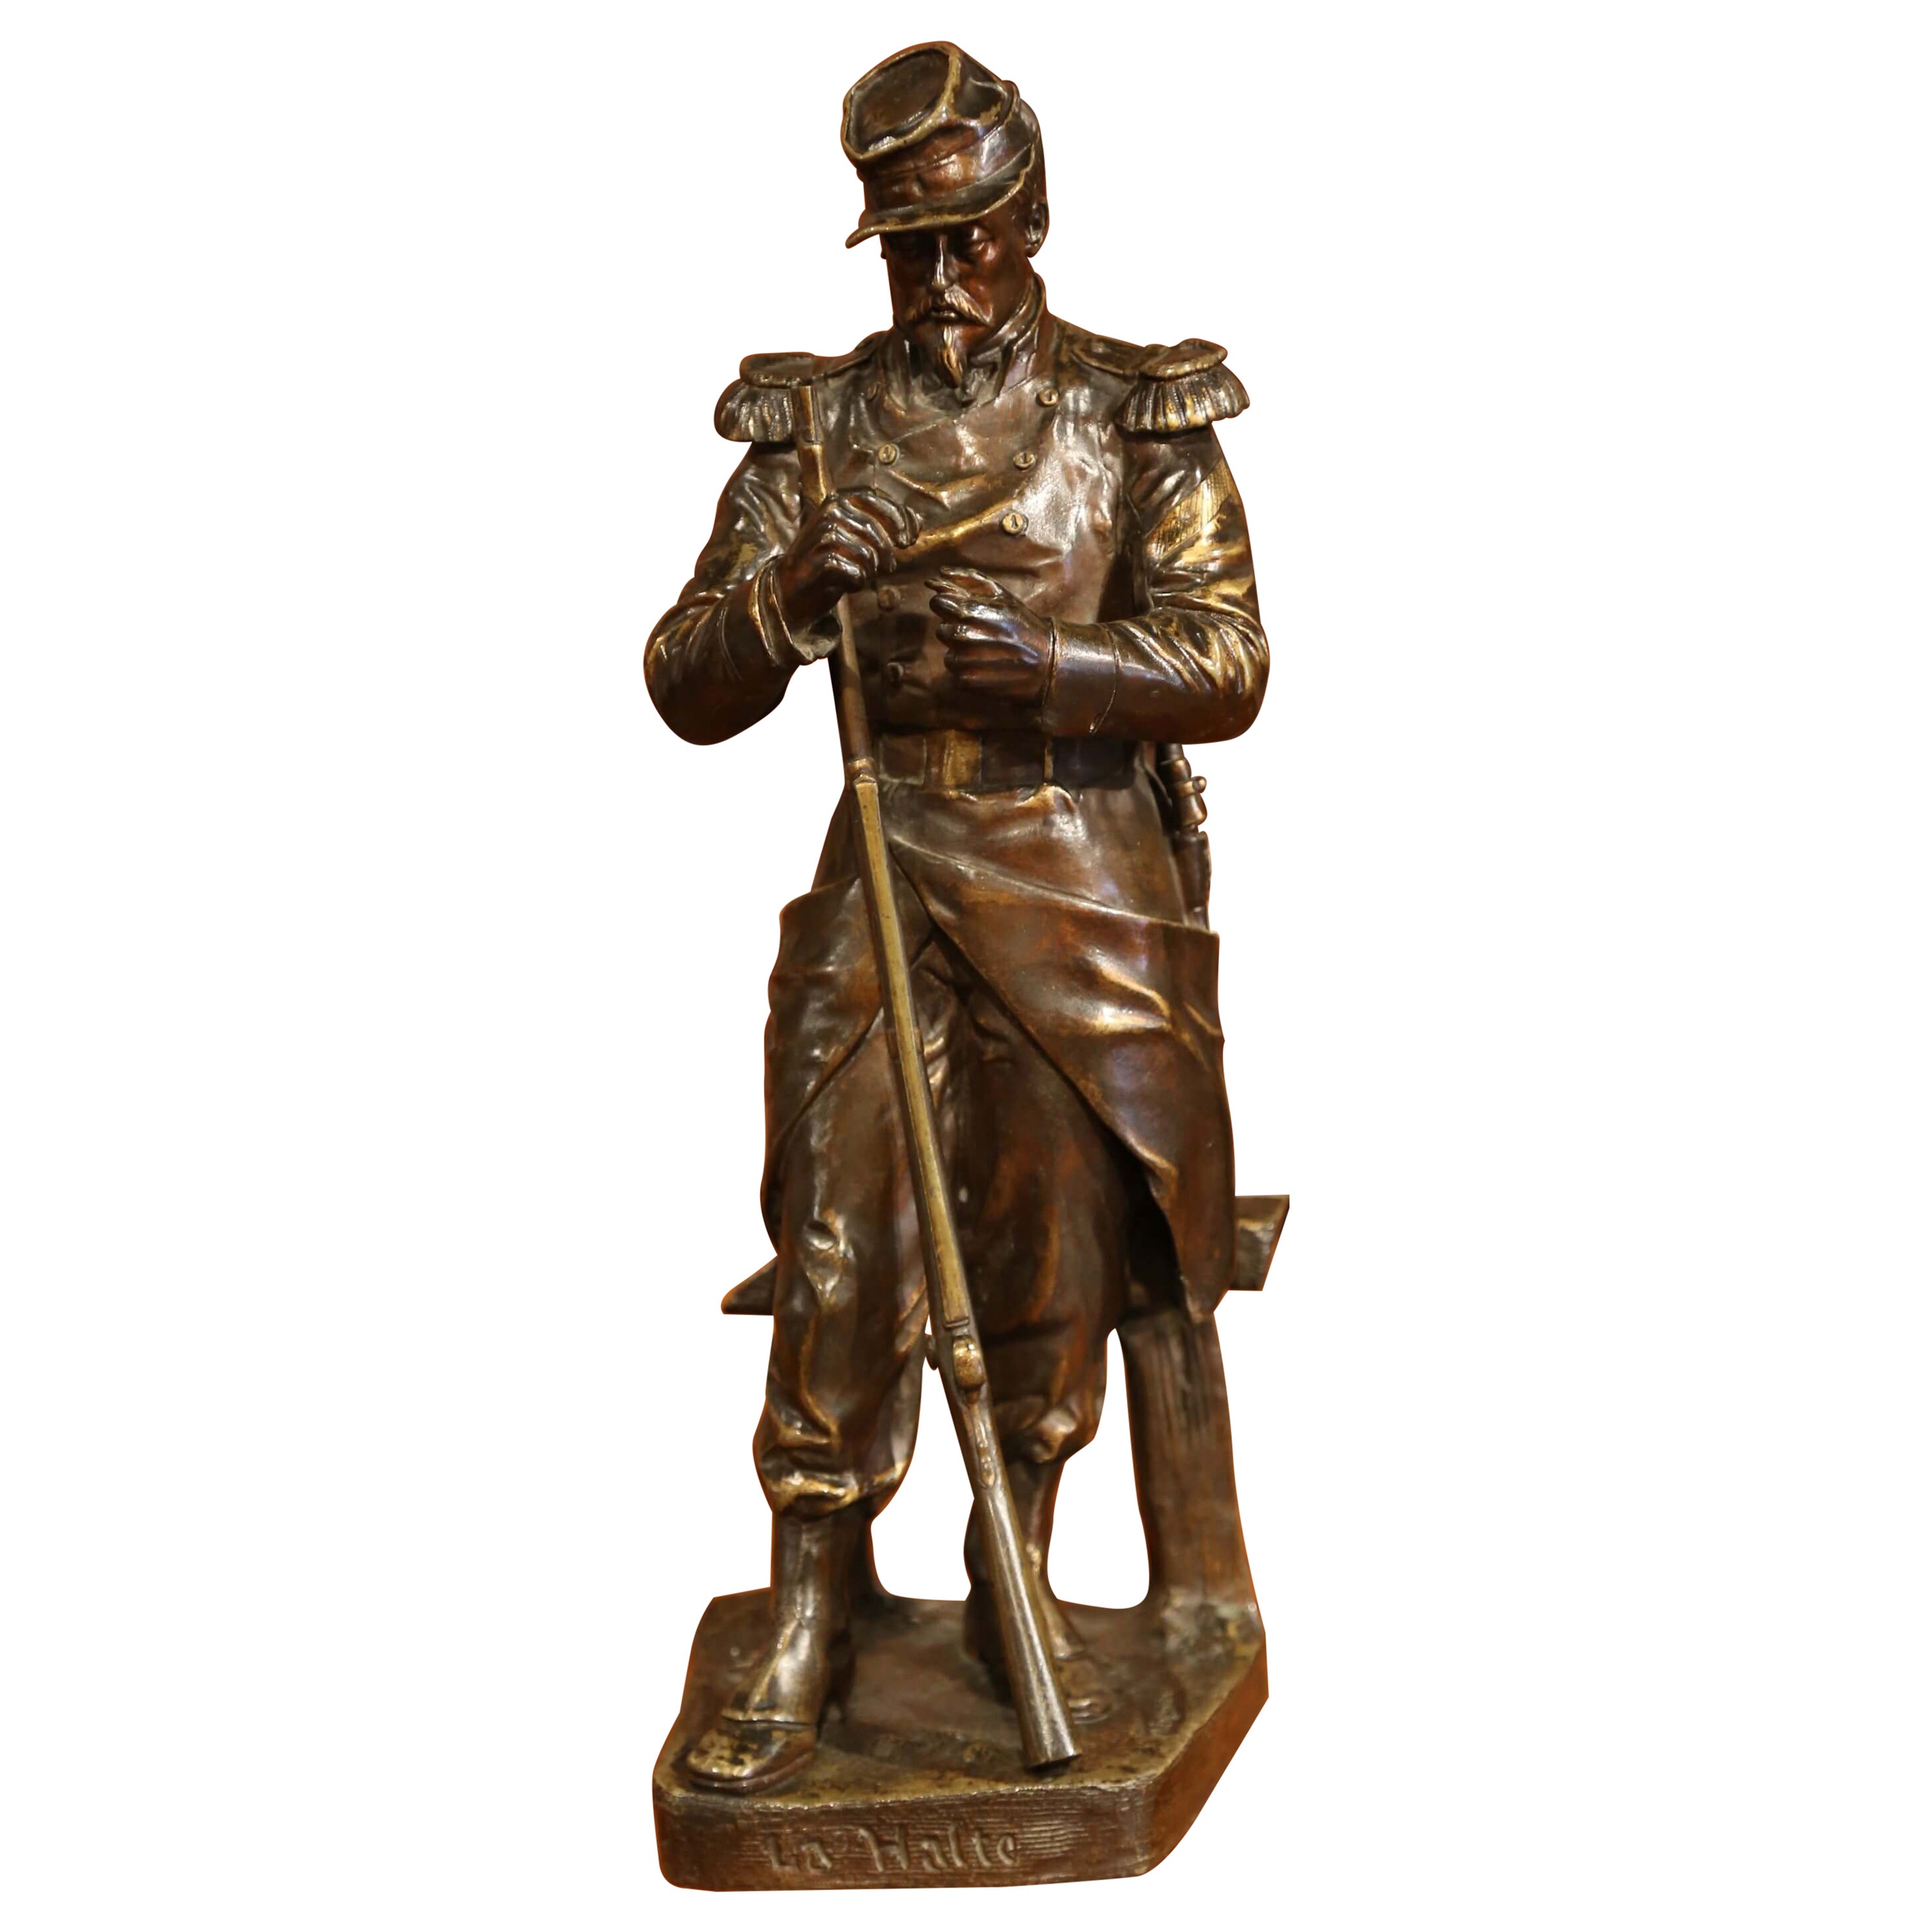 19th Century French Patinated Bronze Sculpture “La Halte” Signed L. Mennessier